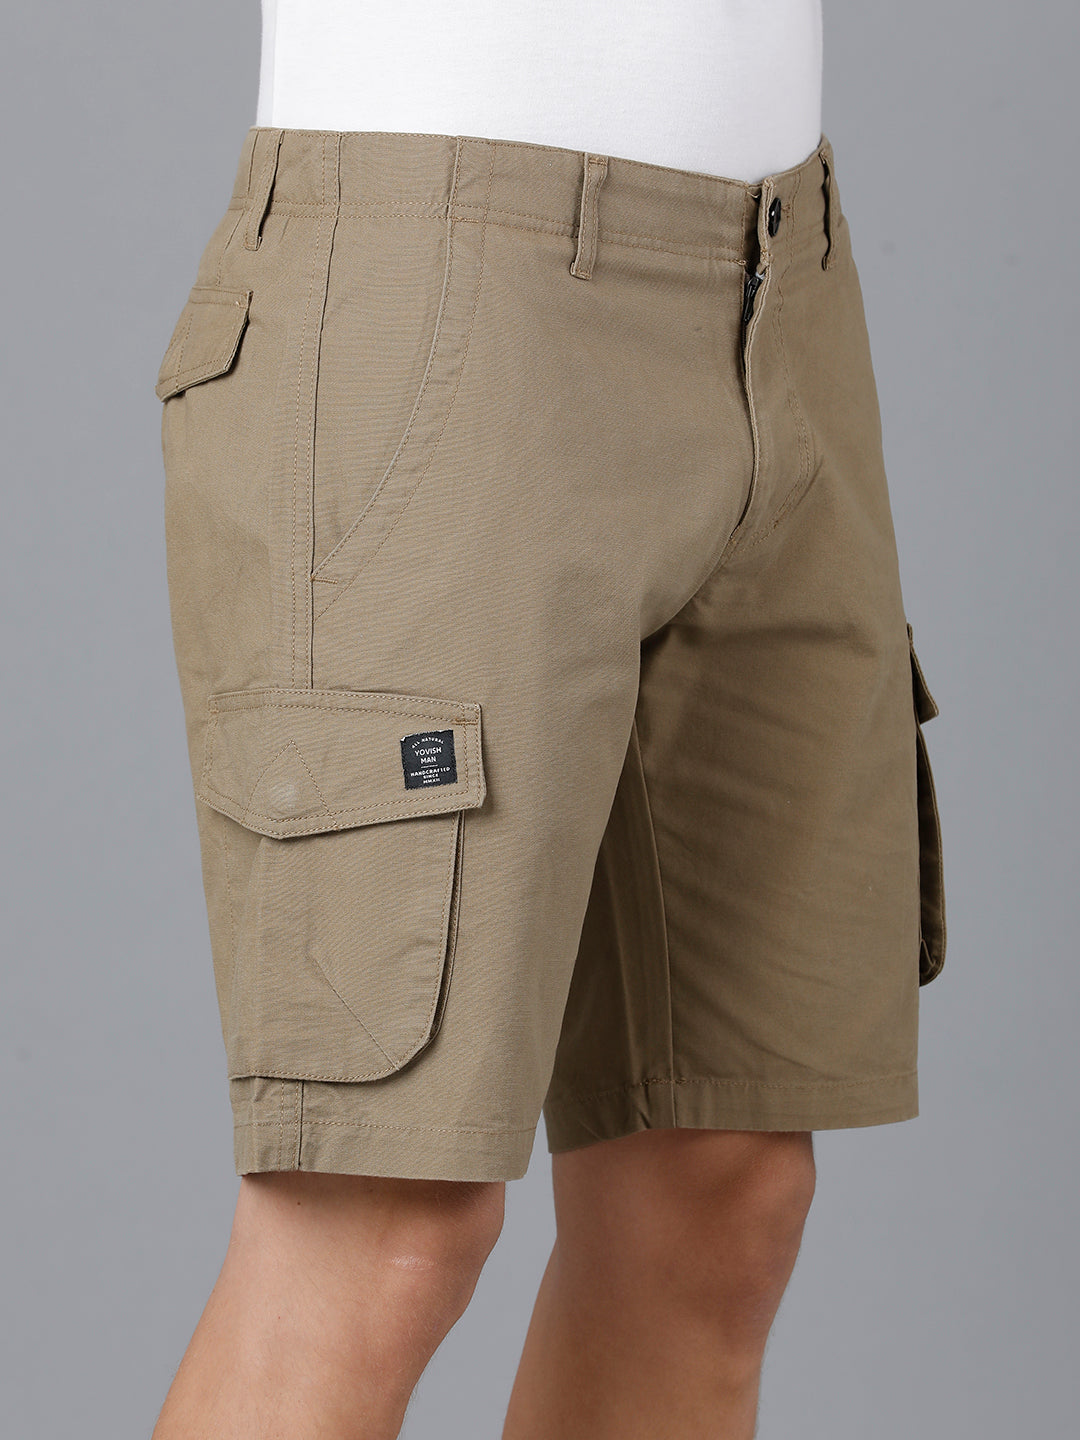 Six pocket cargo shorts